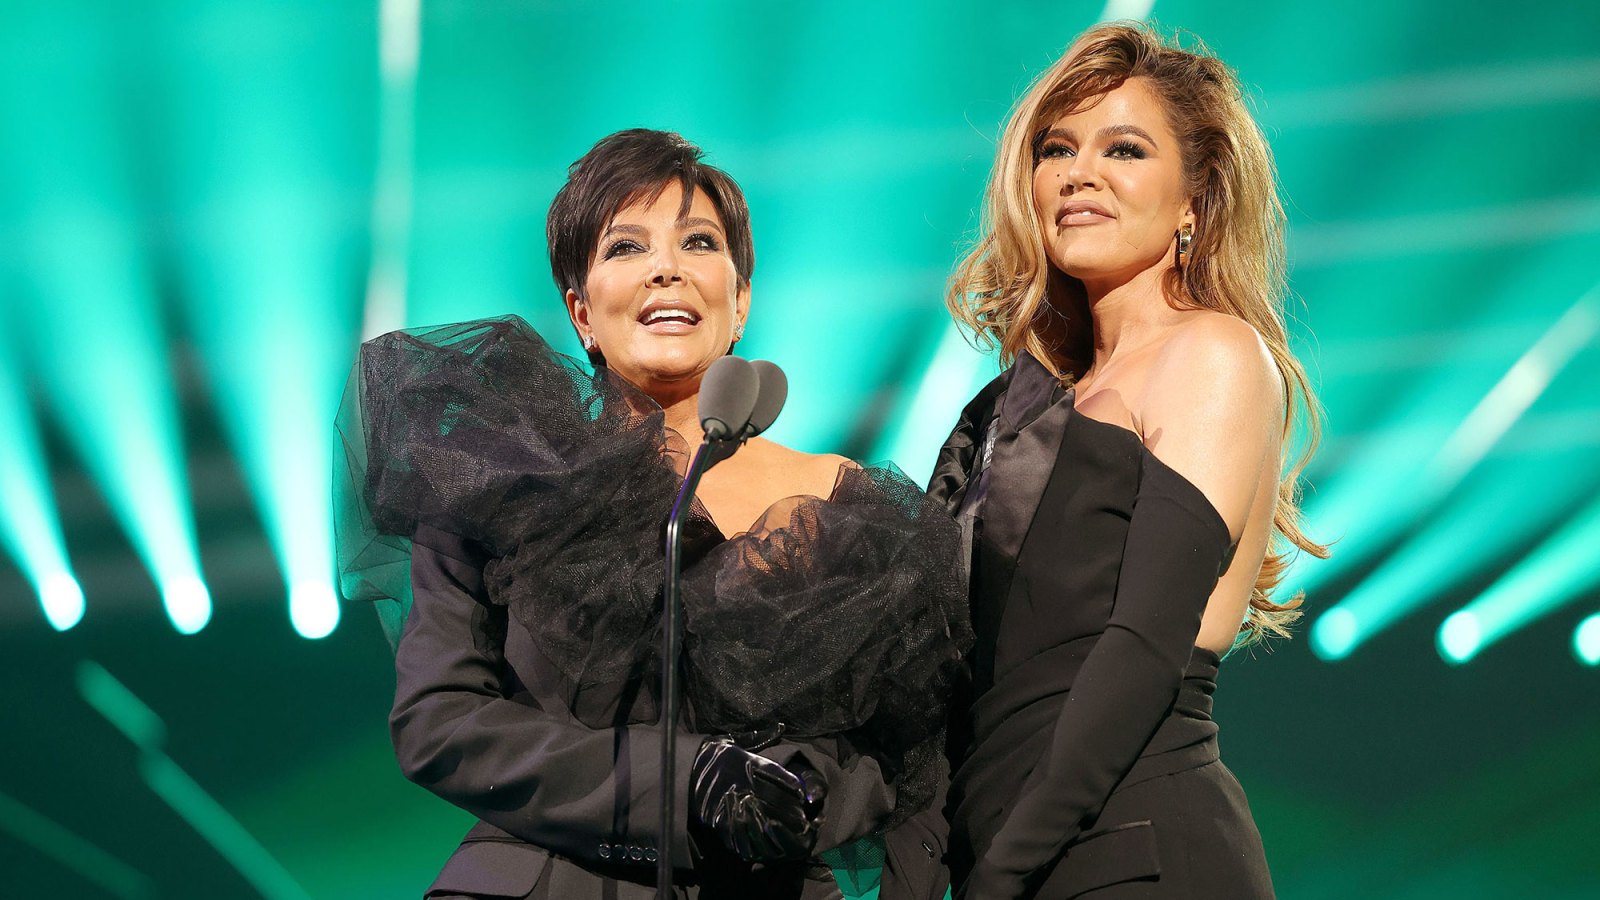 Kris Jenner and Khloe Kardashian People's Choice Awards 2022